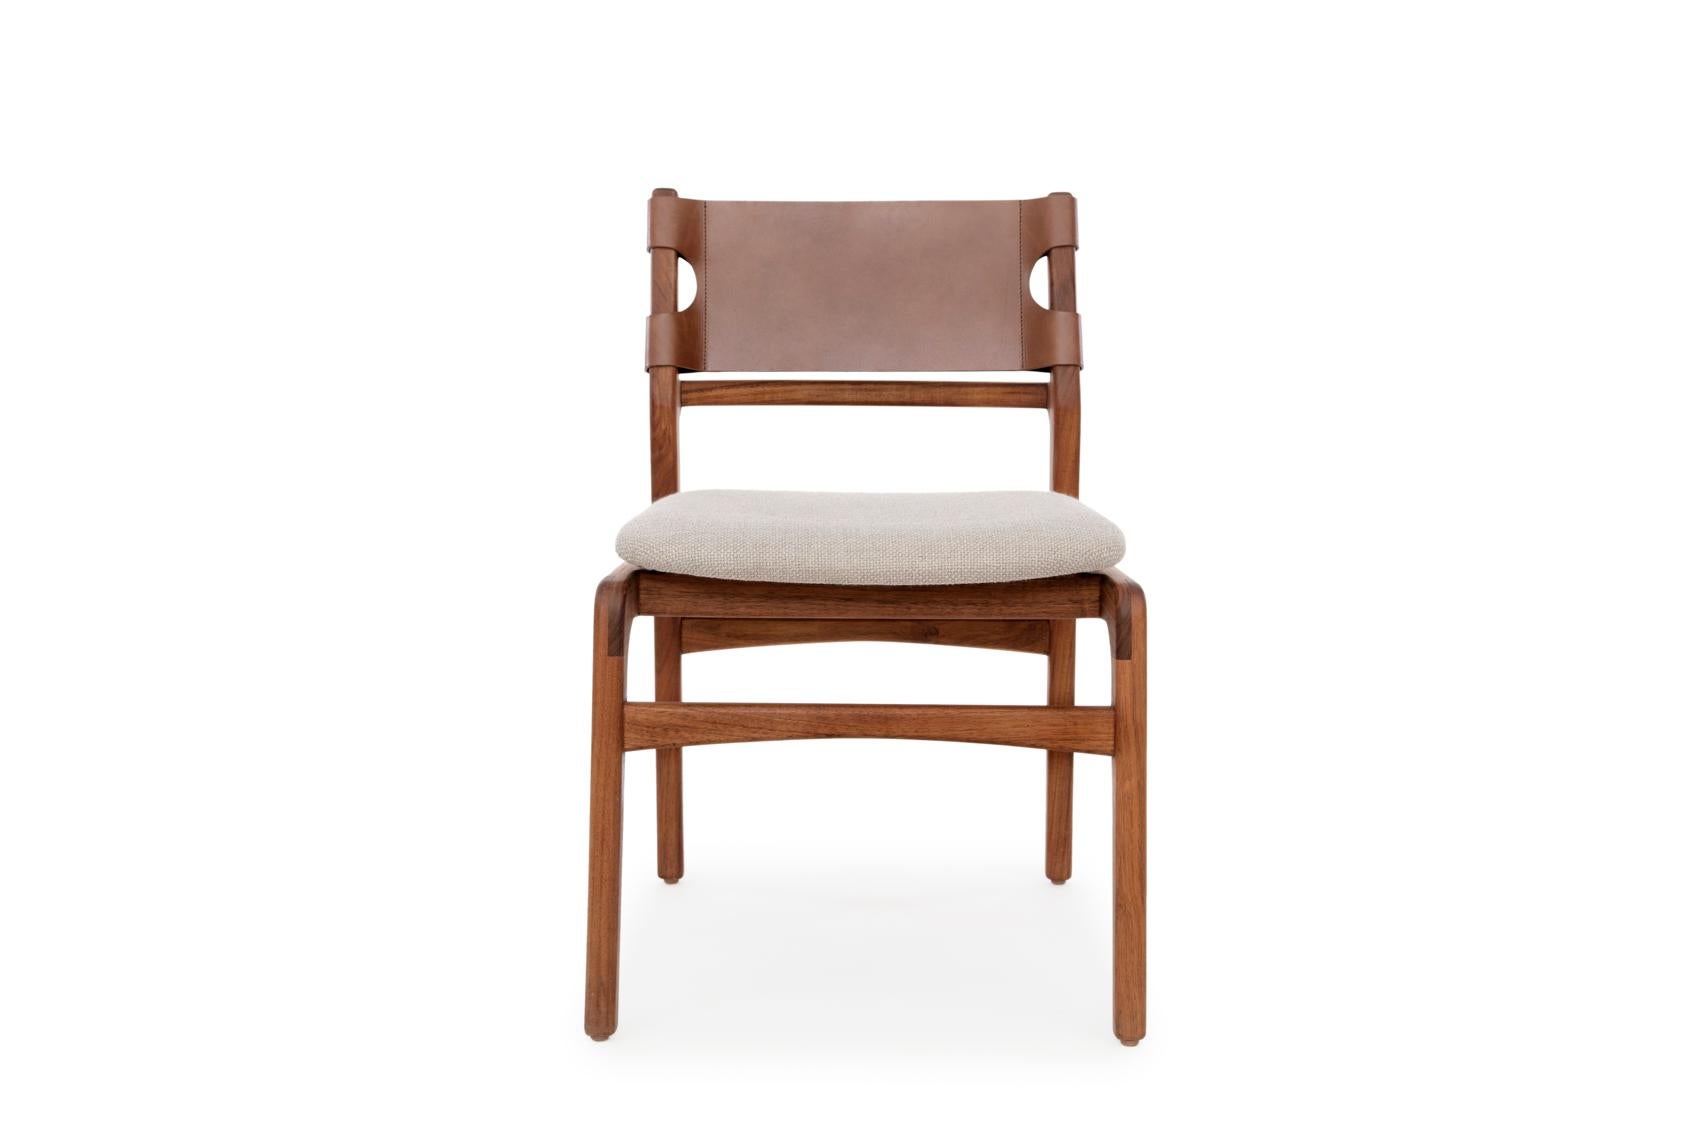 Mexican Mathias Chair 'No armrest' For Sale